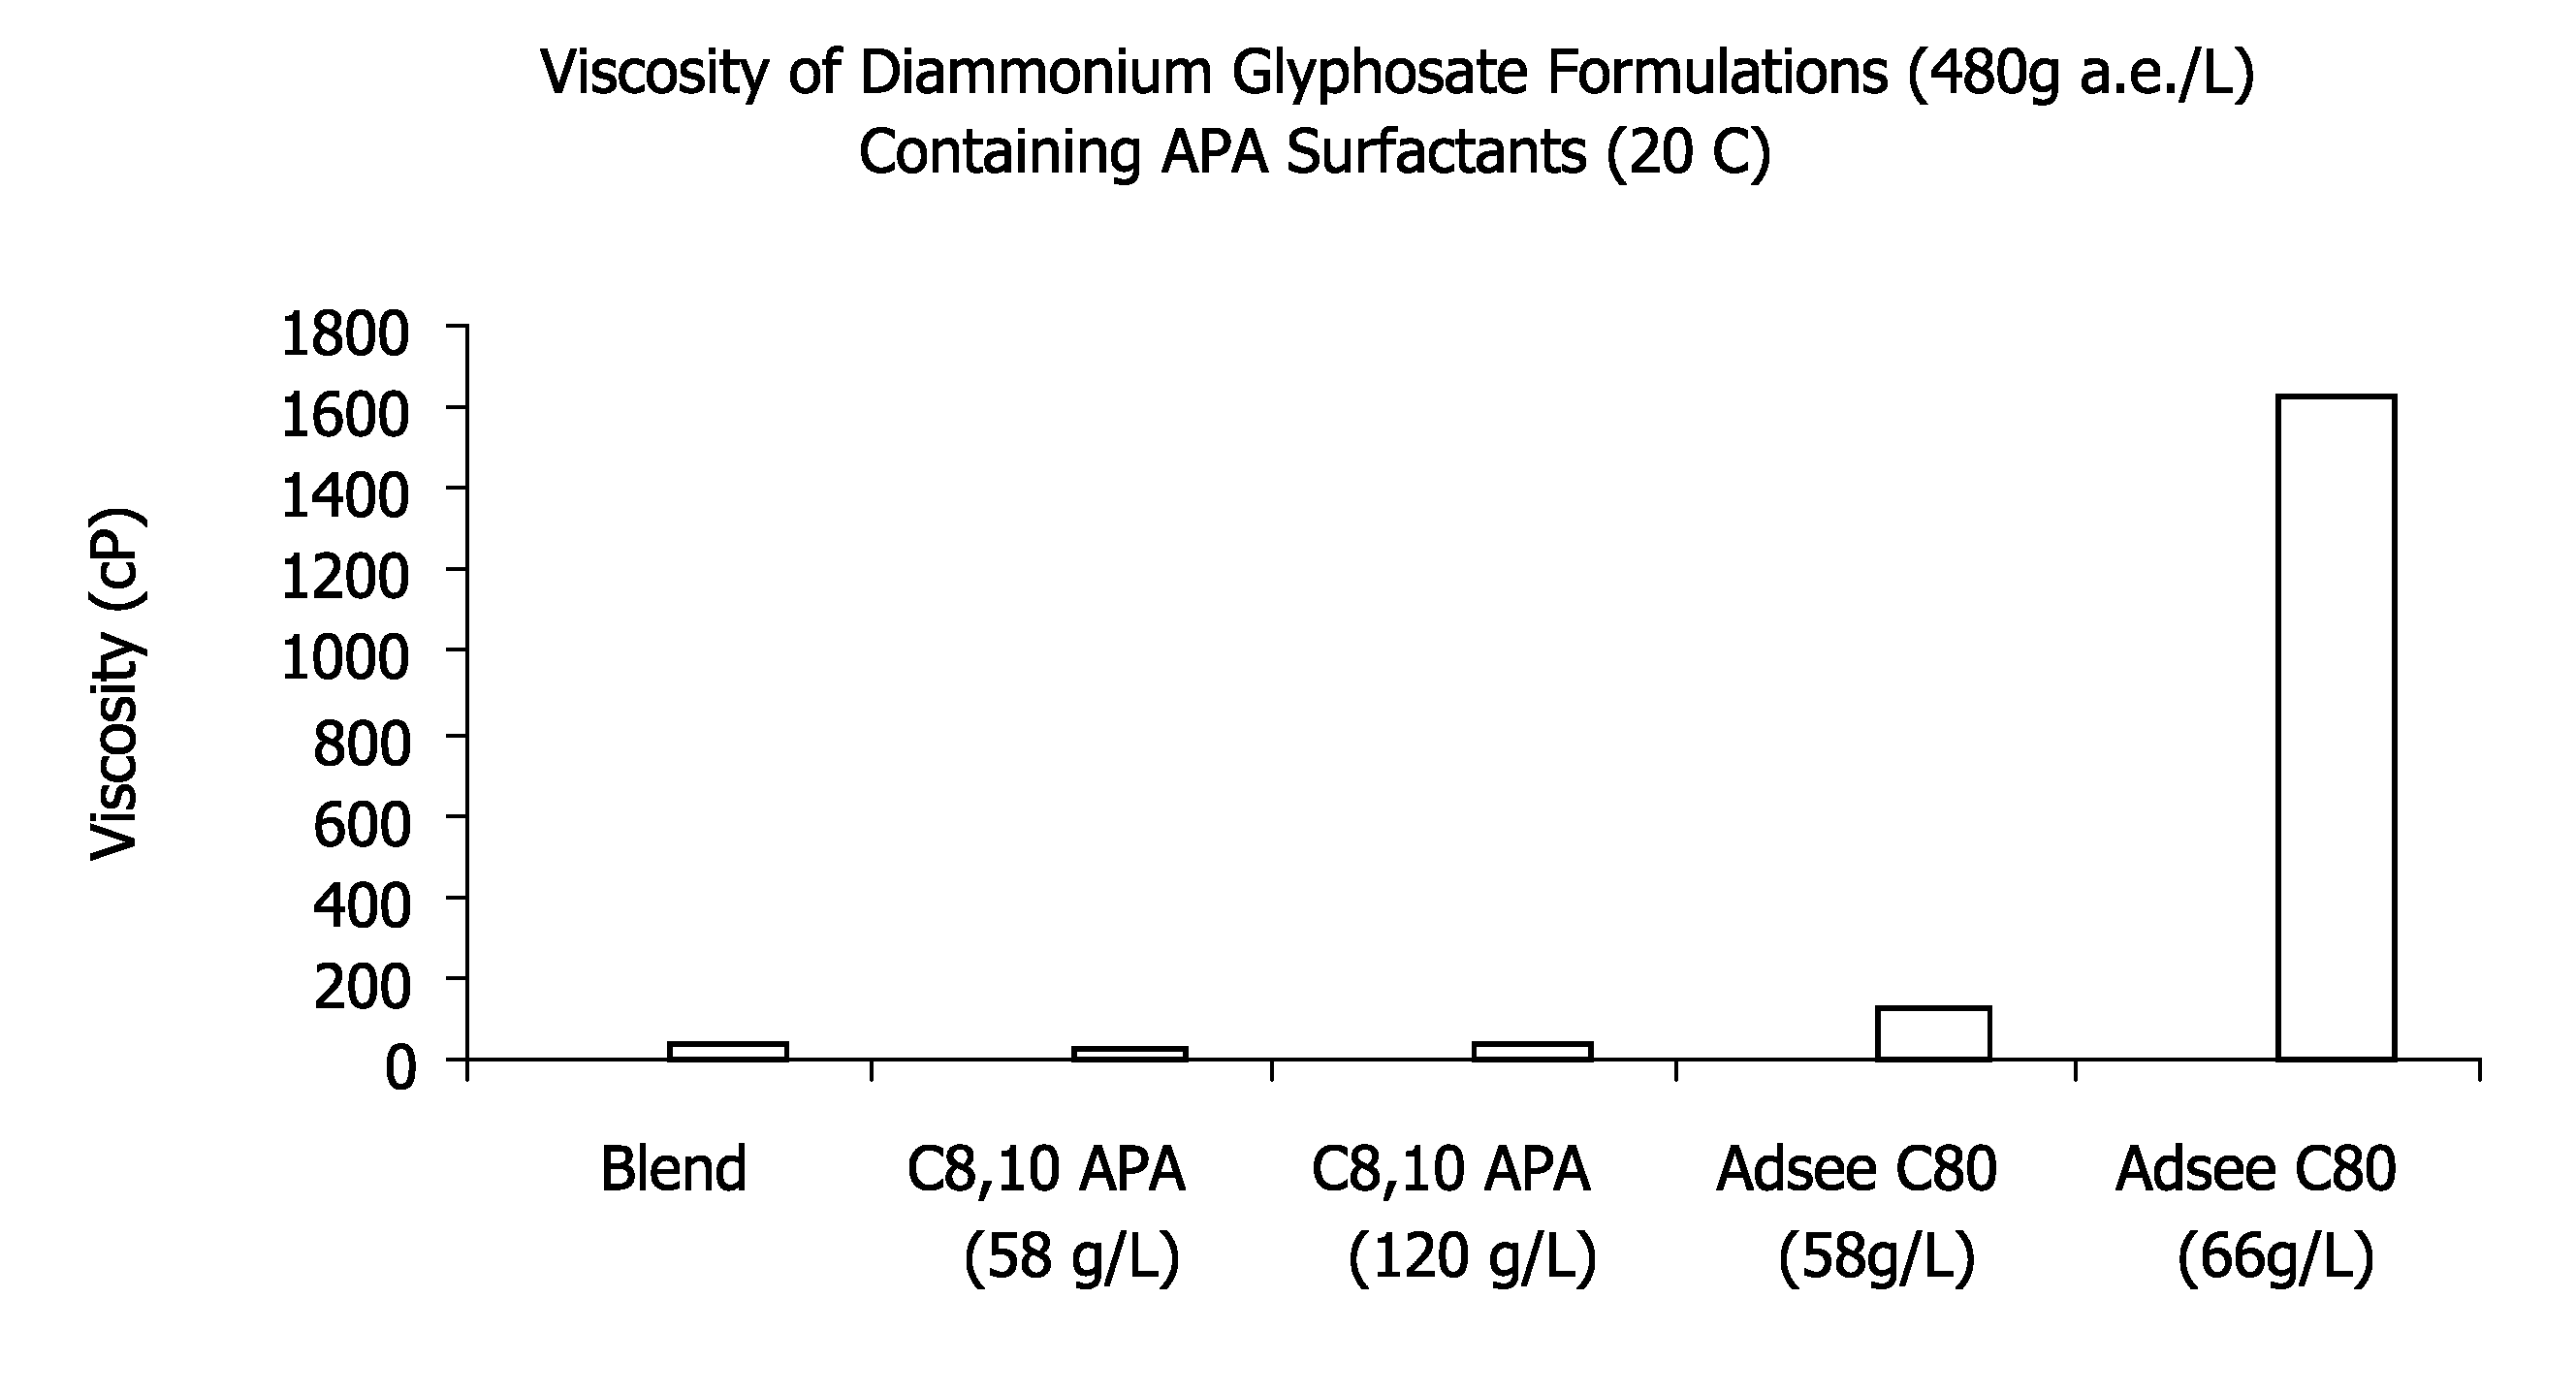 Glyphosate formulations containing amidoalkylamine surfactants